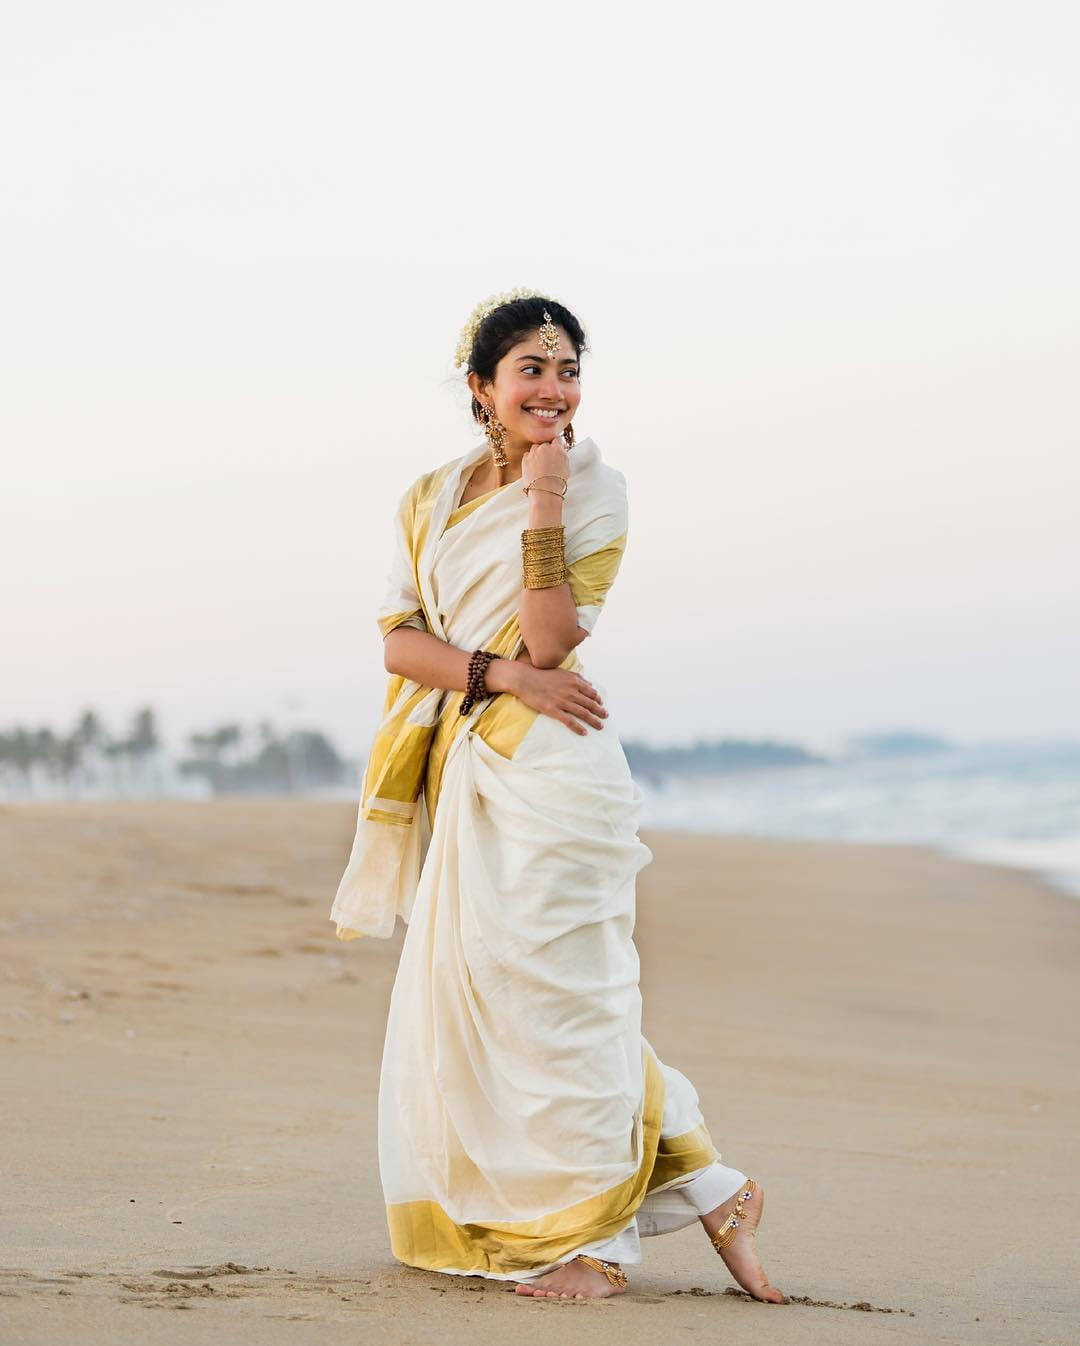 Sai Pallavi Modeling Near Seashore